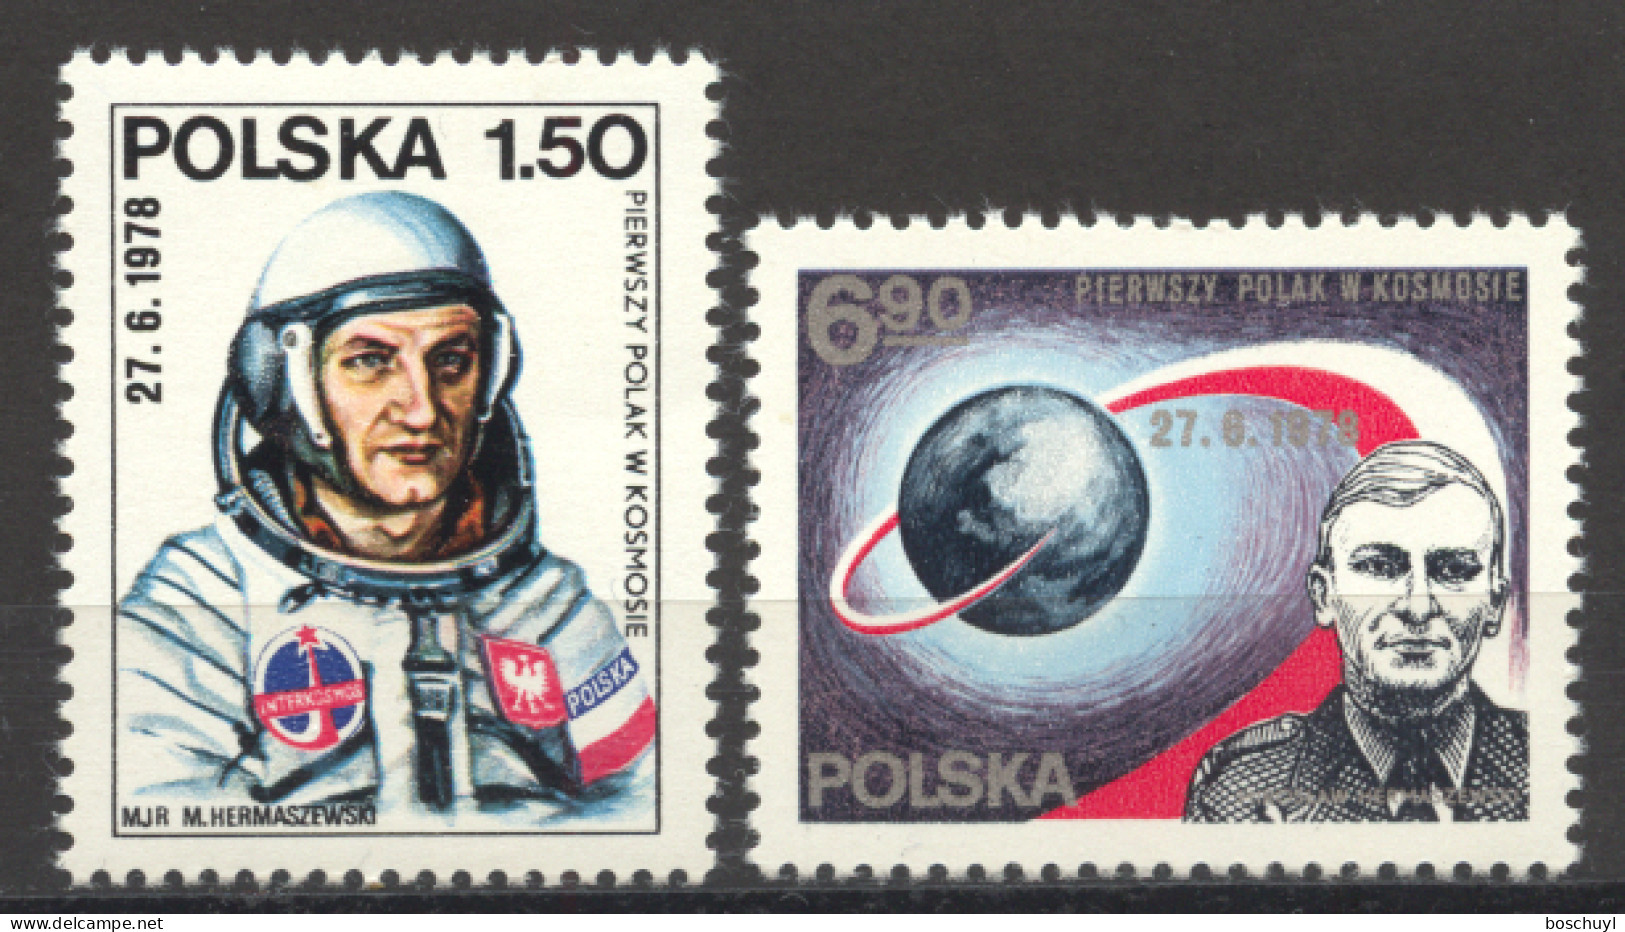 Poland, 1978, Space, Interkosmos, MNH, Michel 2563-2564 - Unused Stamps